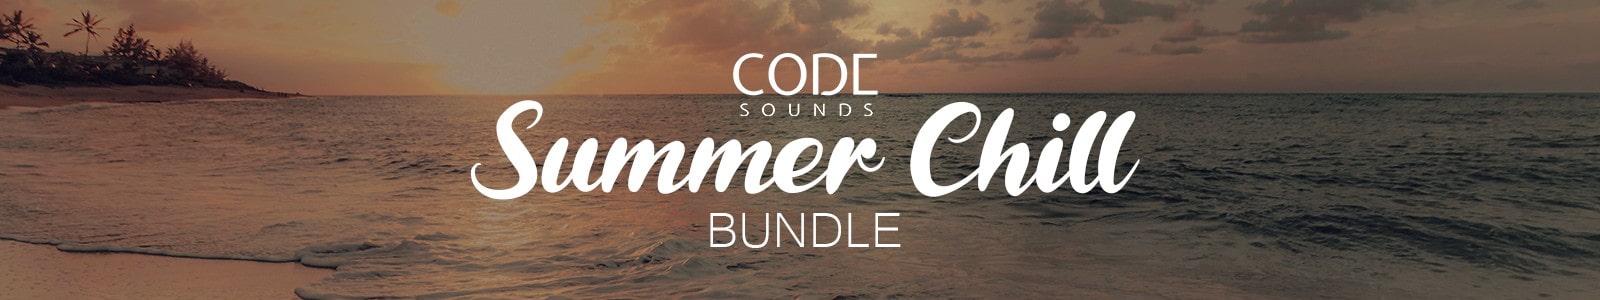 Code Sounds Summer Chill Bundle